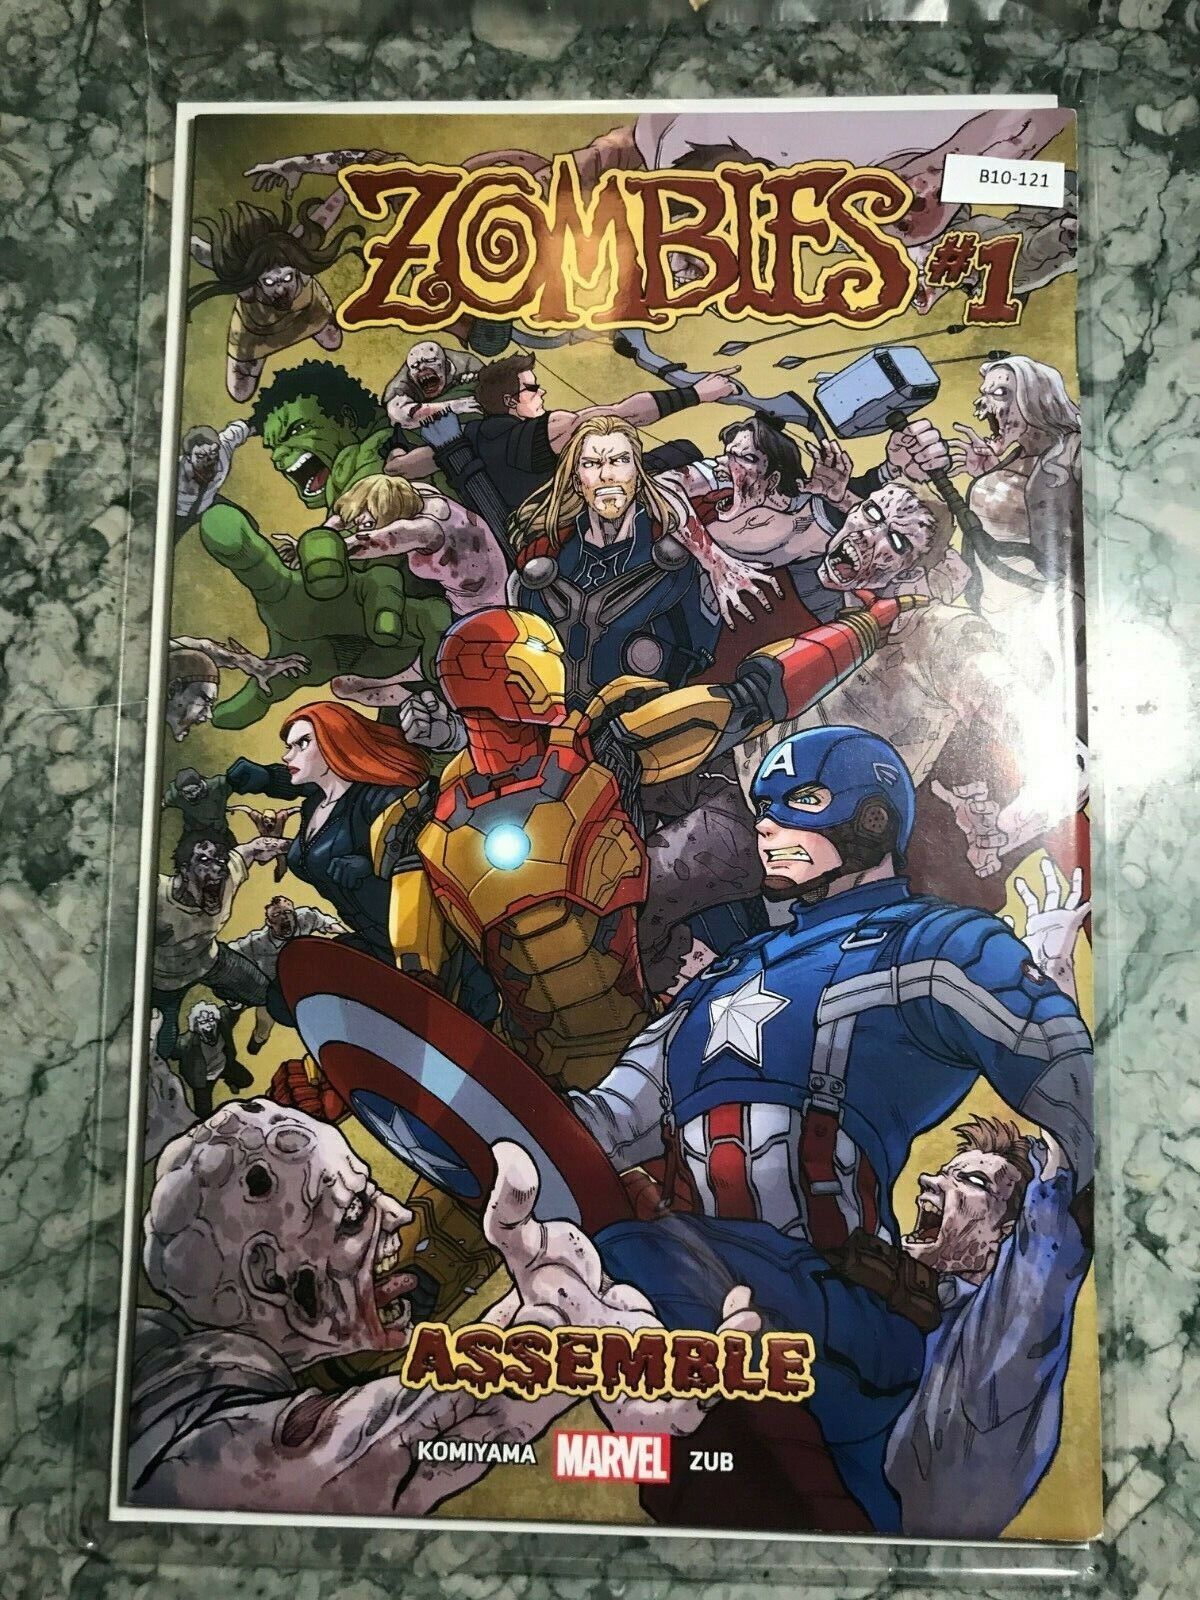 Zombies Assemble vol.1 #1 2017 High Grade 8.0 Marvel Comic Book B10-121